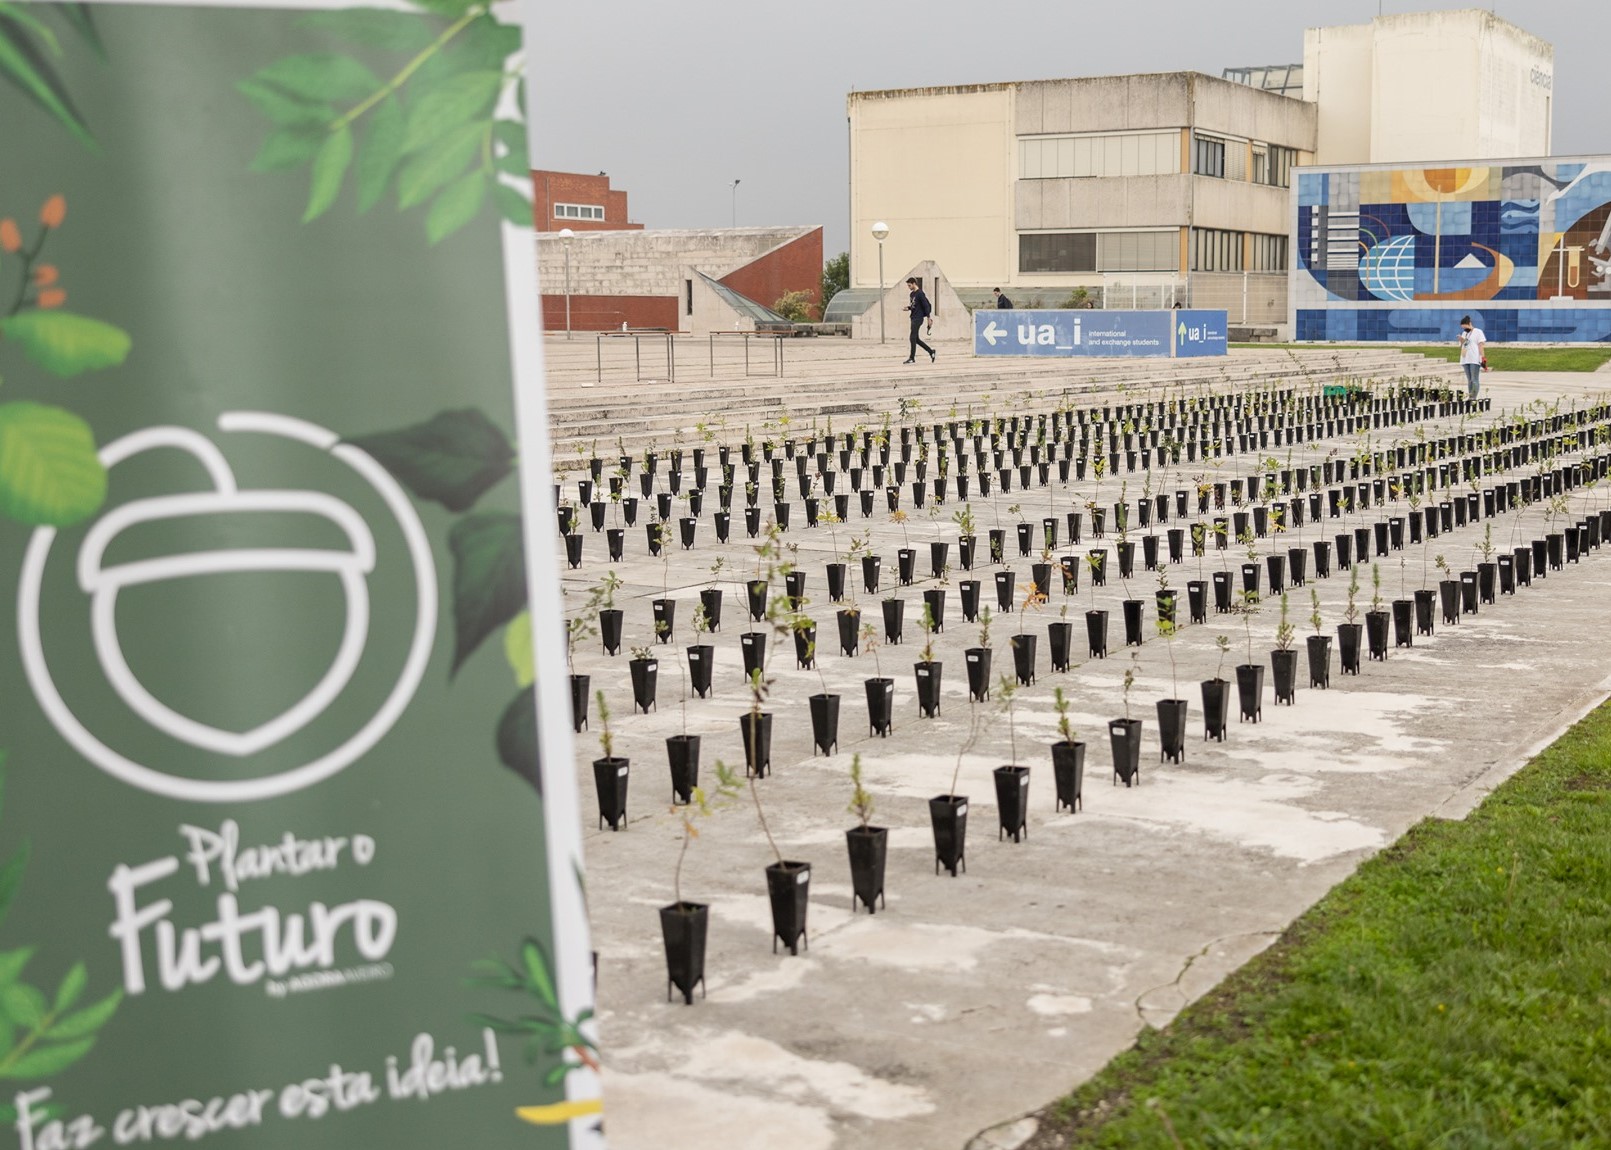 Caetano Auto apoia projeto AgoraAveiro "Plantar o Futuro"